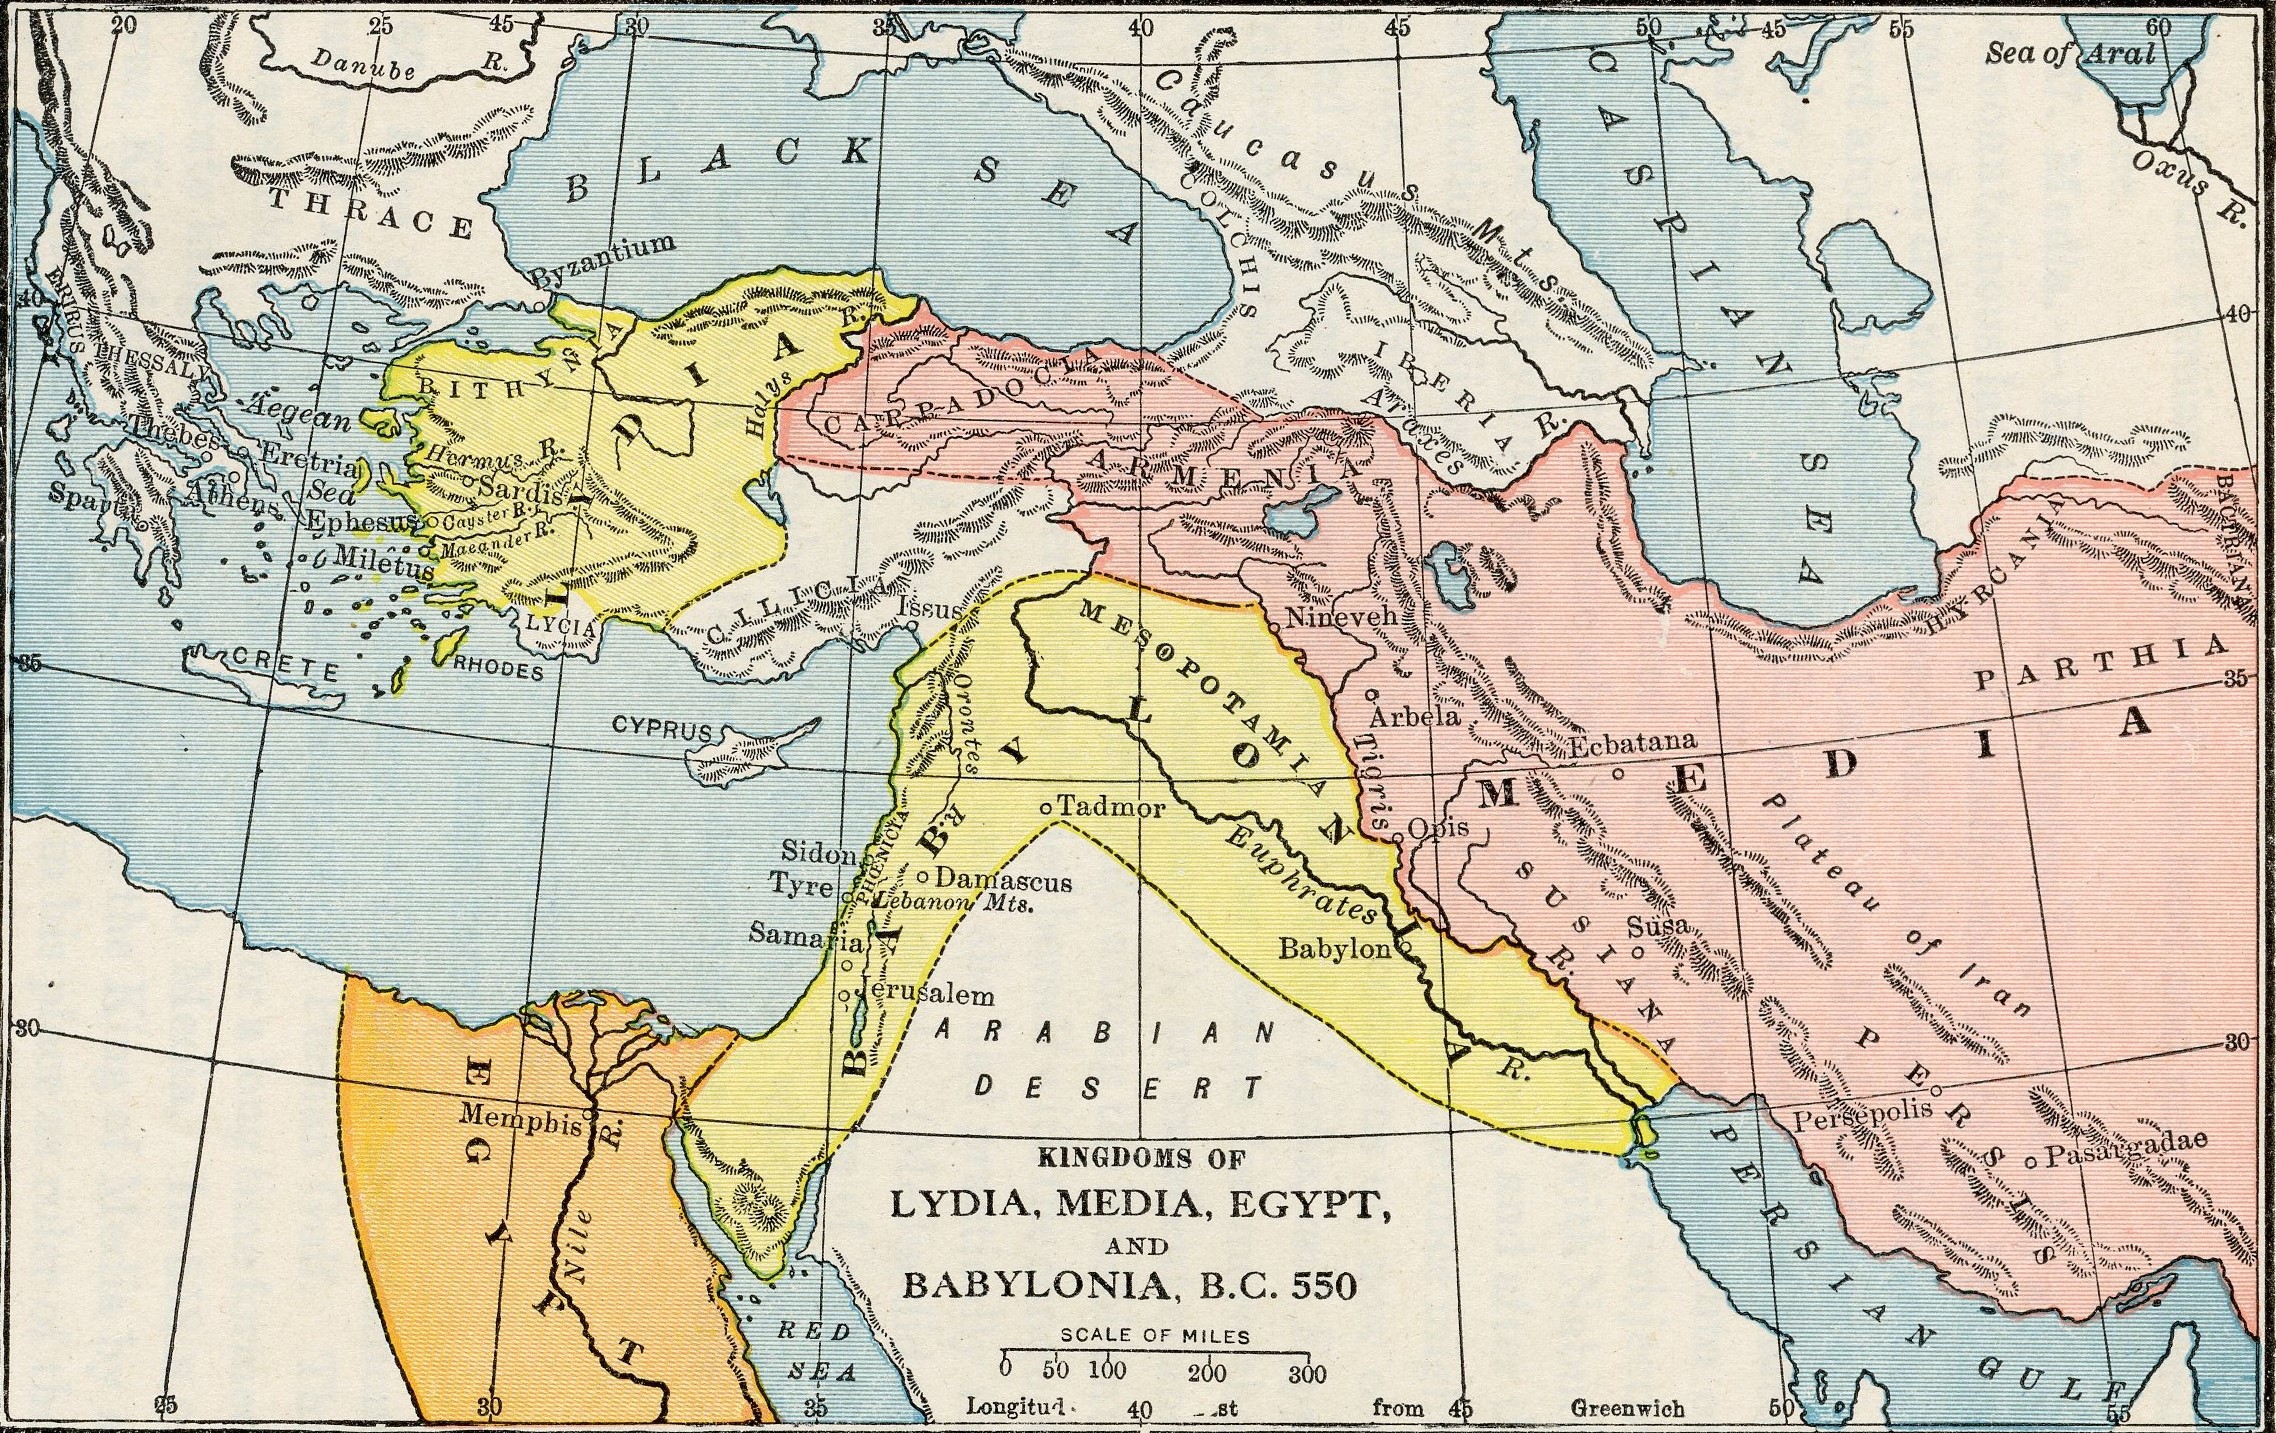 Kingdoms of Lydia, Media, Egypt and Babylonia, 550 B.C.